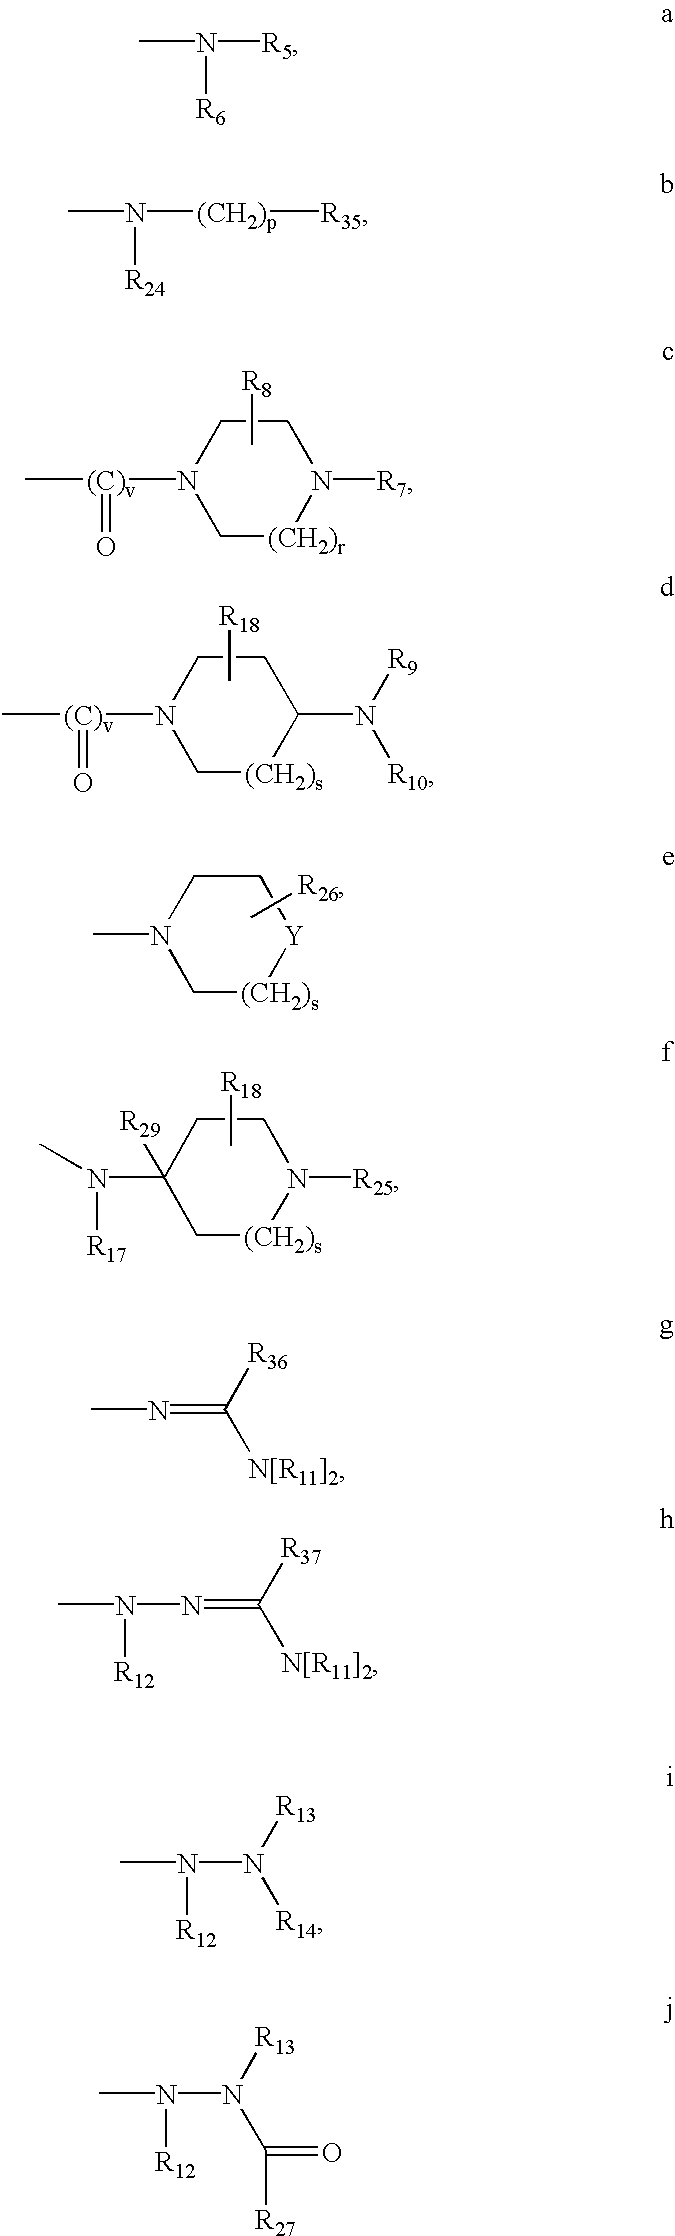 Cyclohexylphenyl carboxamides tocolytic oxytocin receptor antagonists